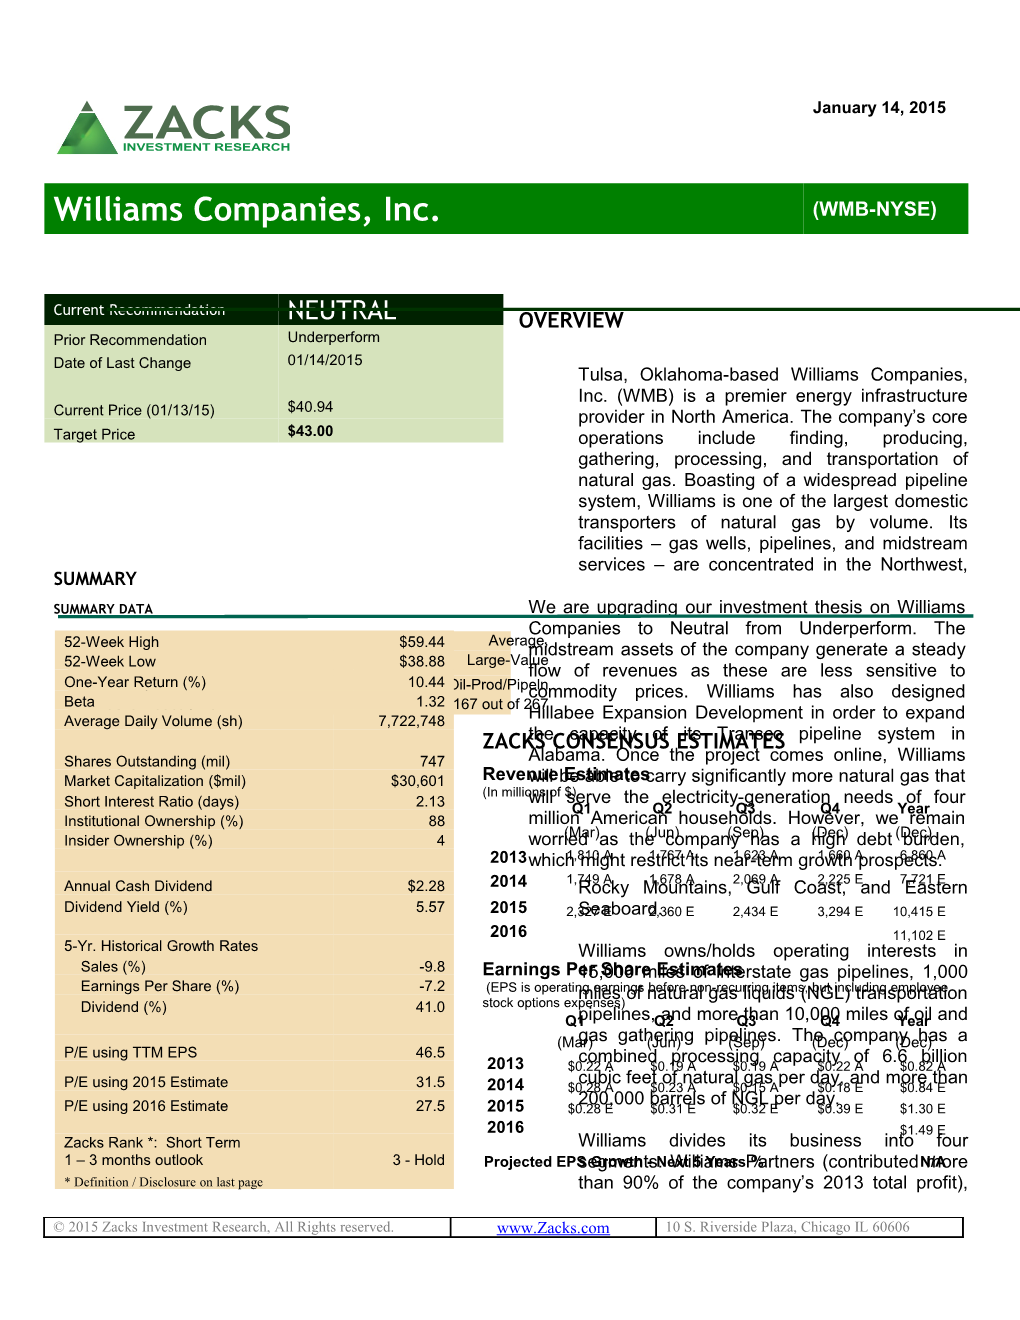 Williams Companies, Inc